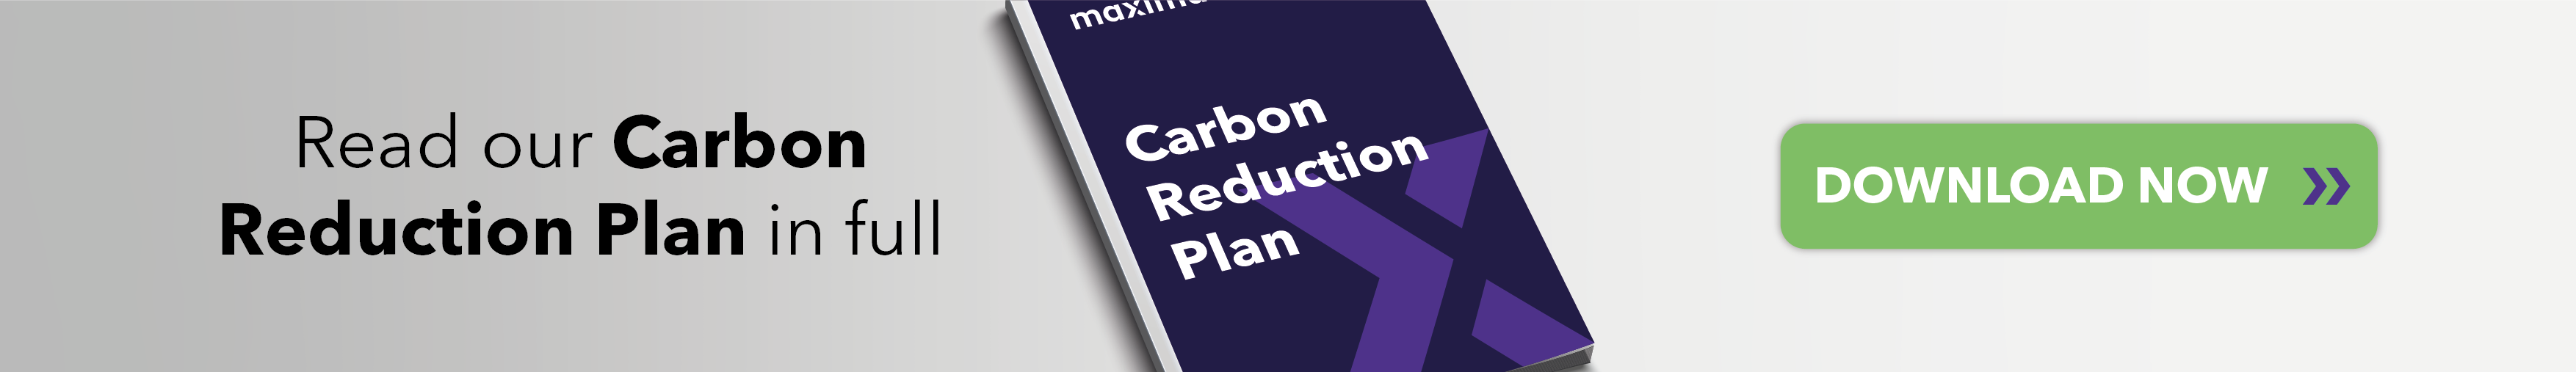 Carbon reduction statement banner